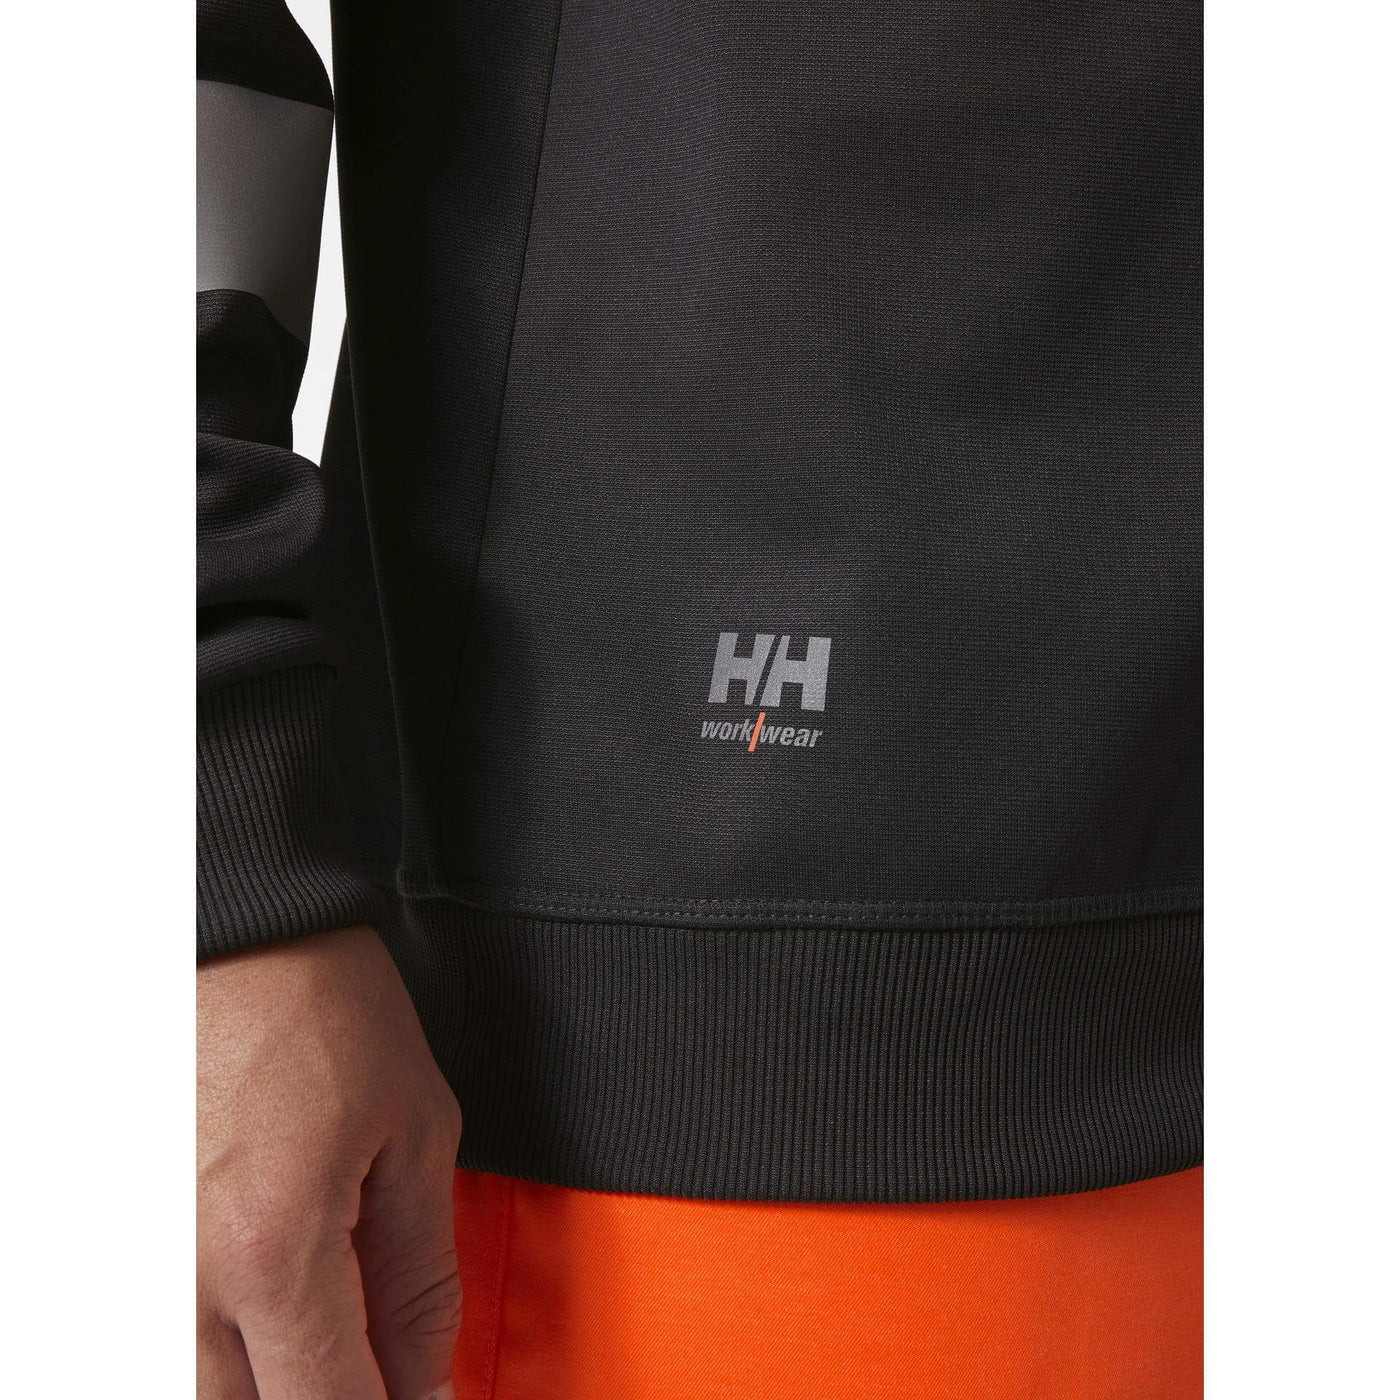 Helly Hansen Addvis Hi-Vis Sweatshirt Class 1 Orange/Ebony Feature 1#colour_orange-ebony